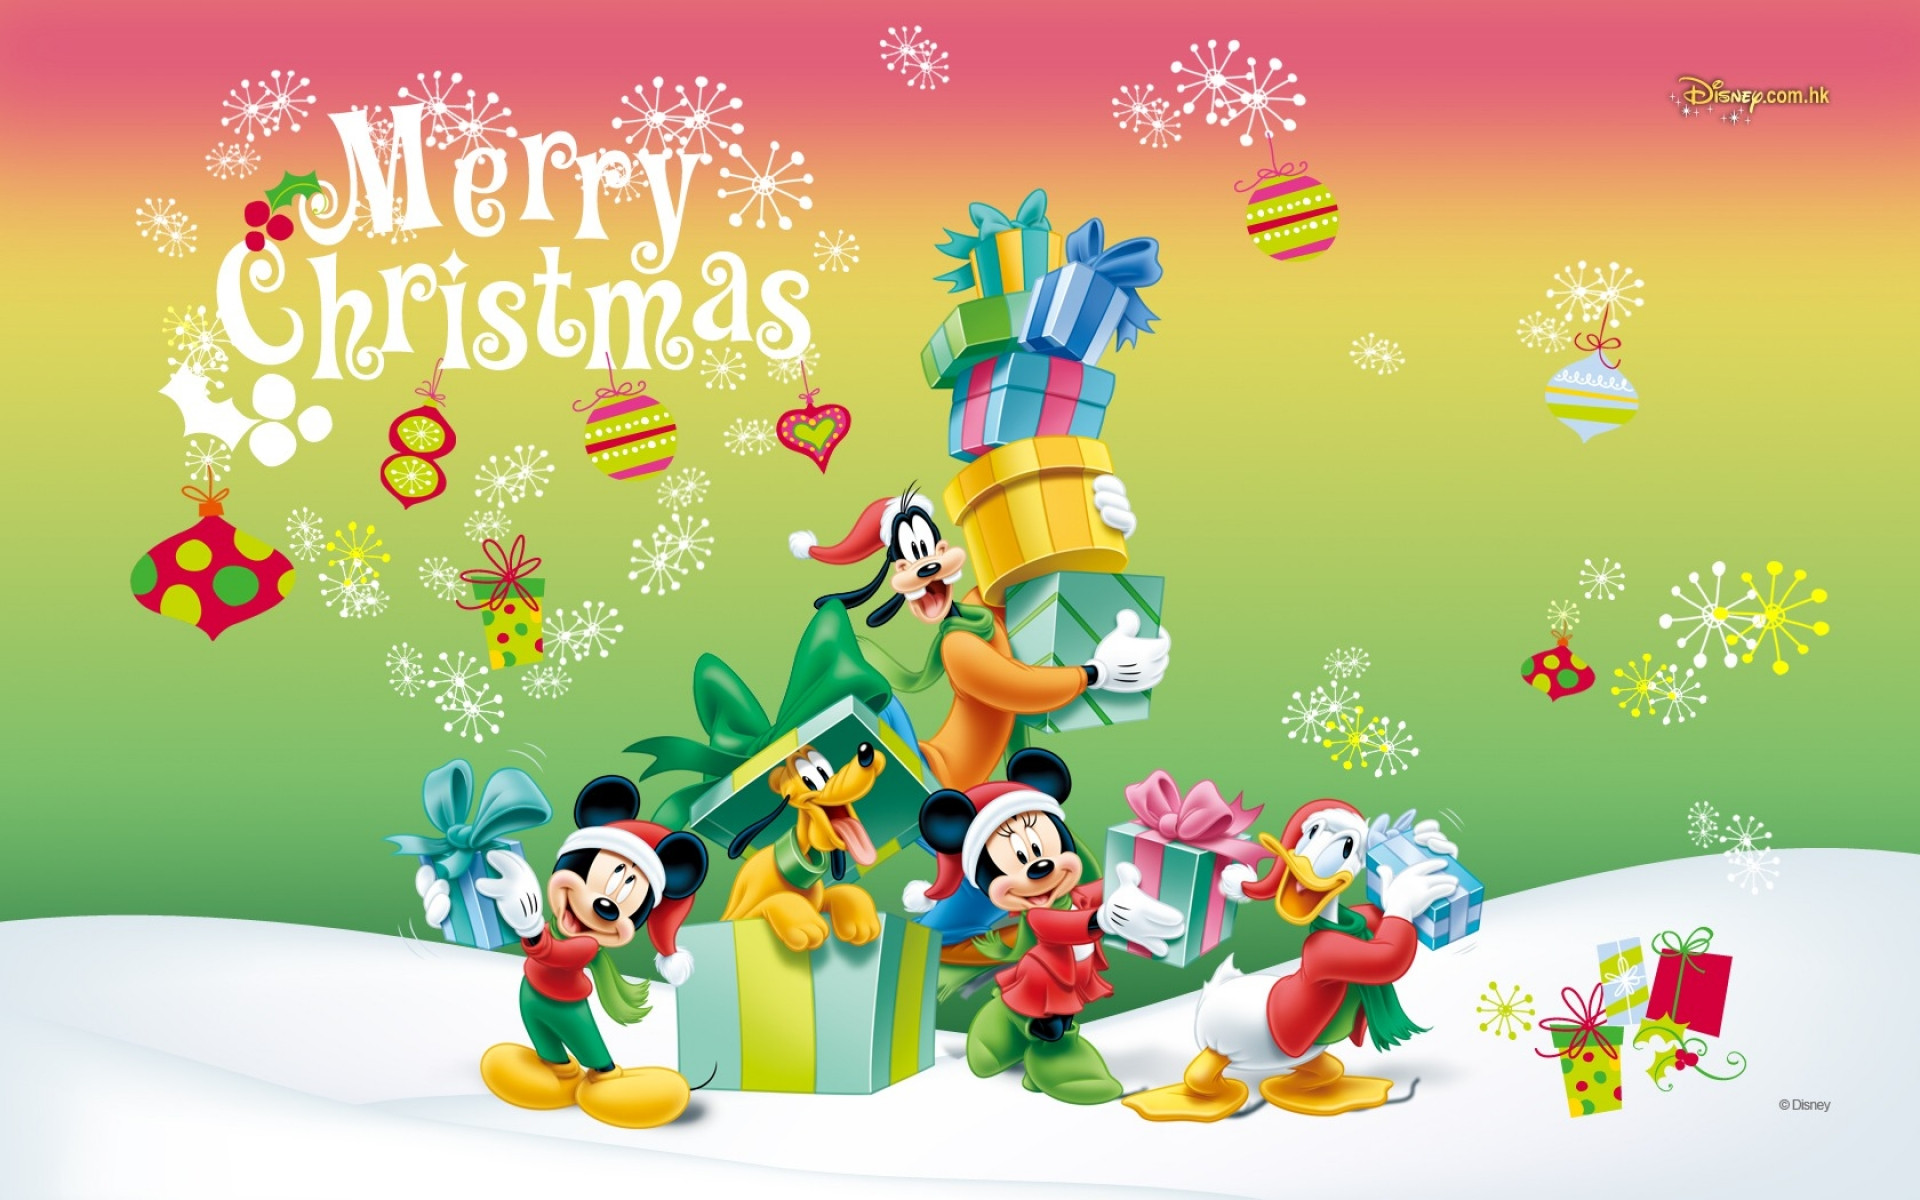 Luxury Disney Christmas Images Wallpaper 3000 Inspirational